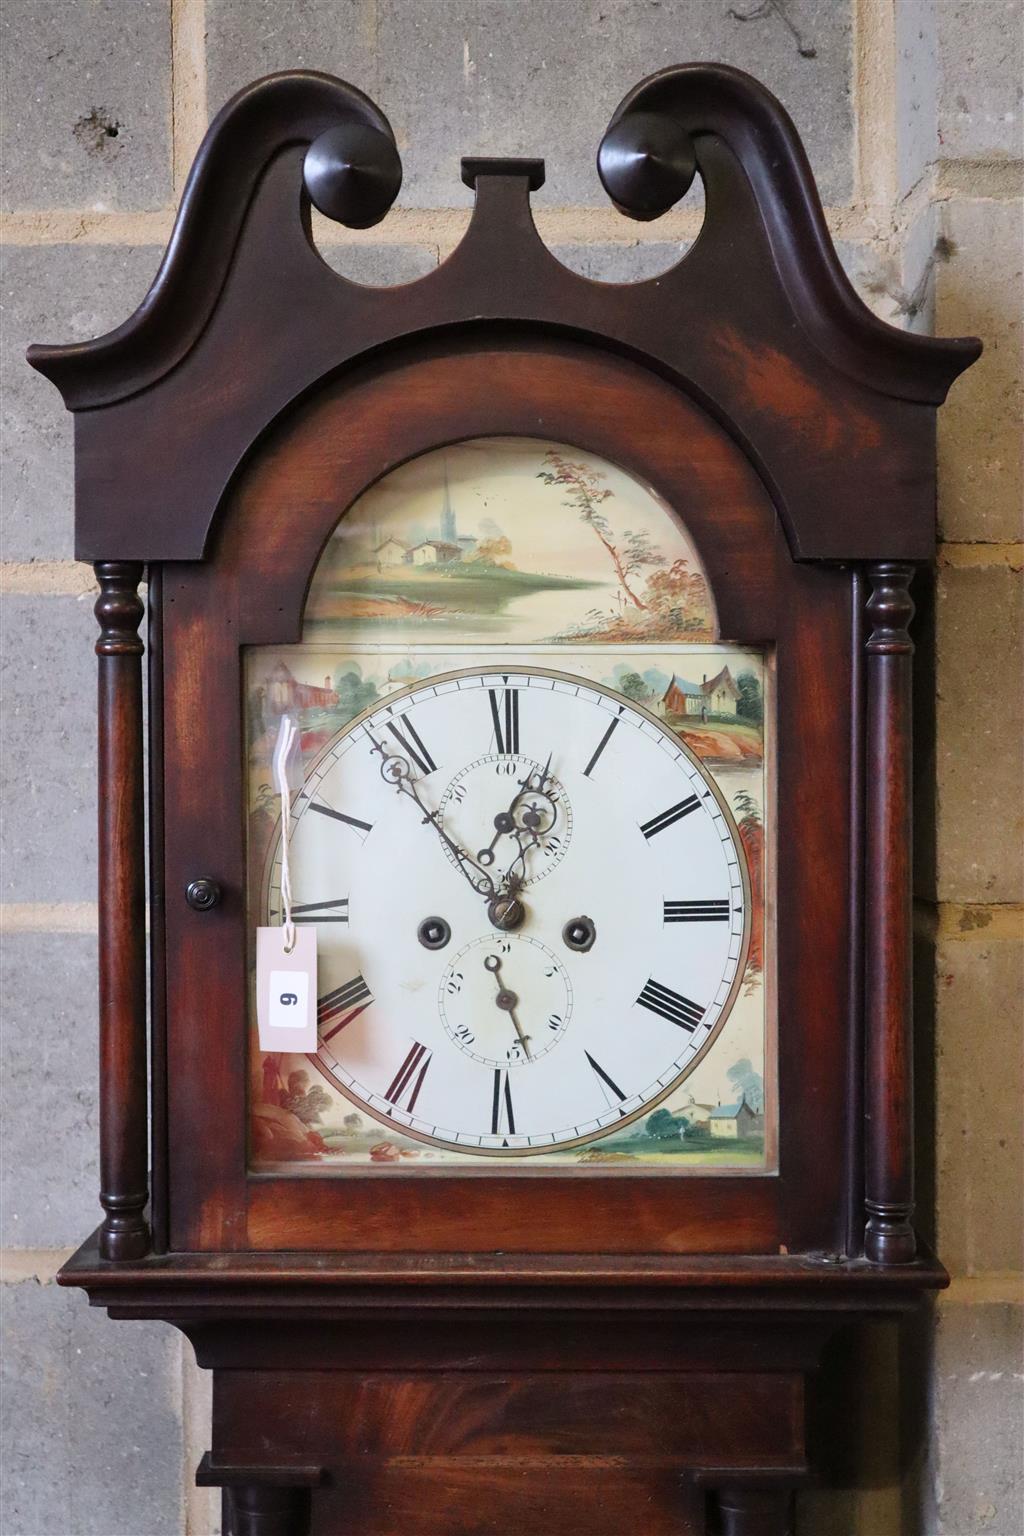 An early 19th century mahogany eight day longcase clock, height 208cm